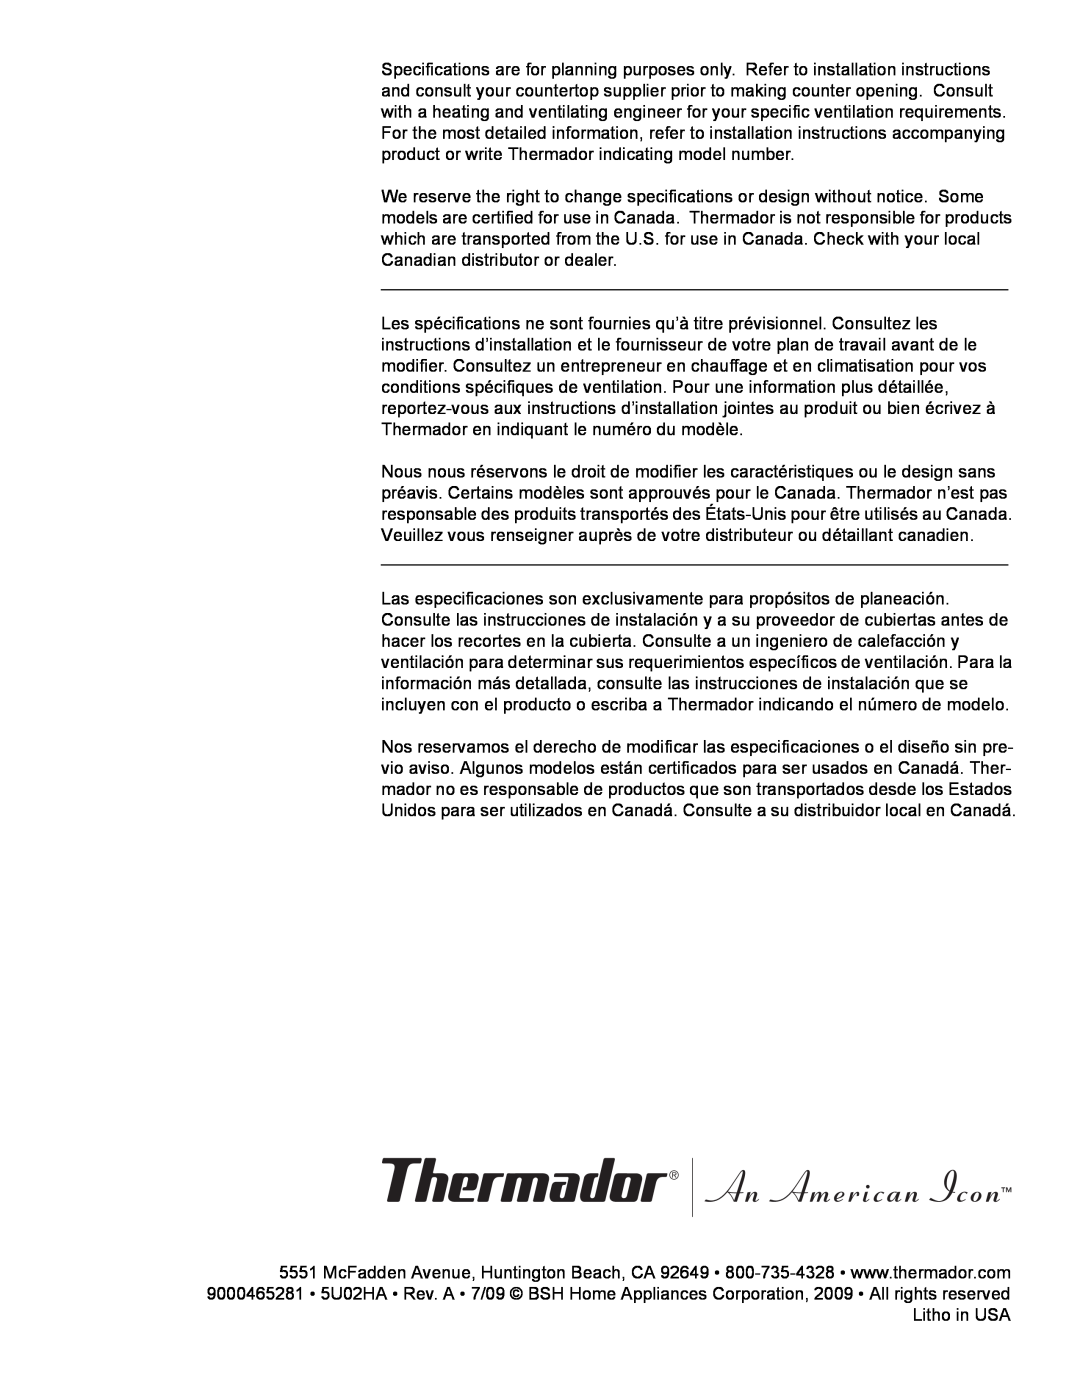 Thermador PCG30, PCG36, PCG48 installation manual 